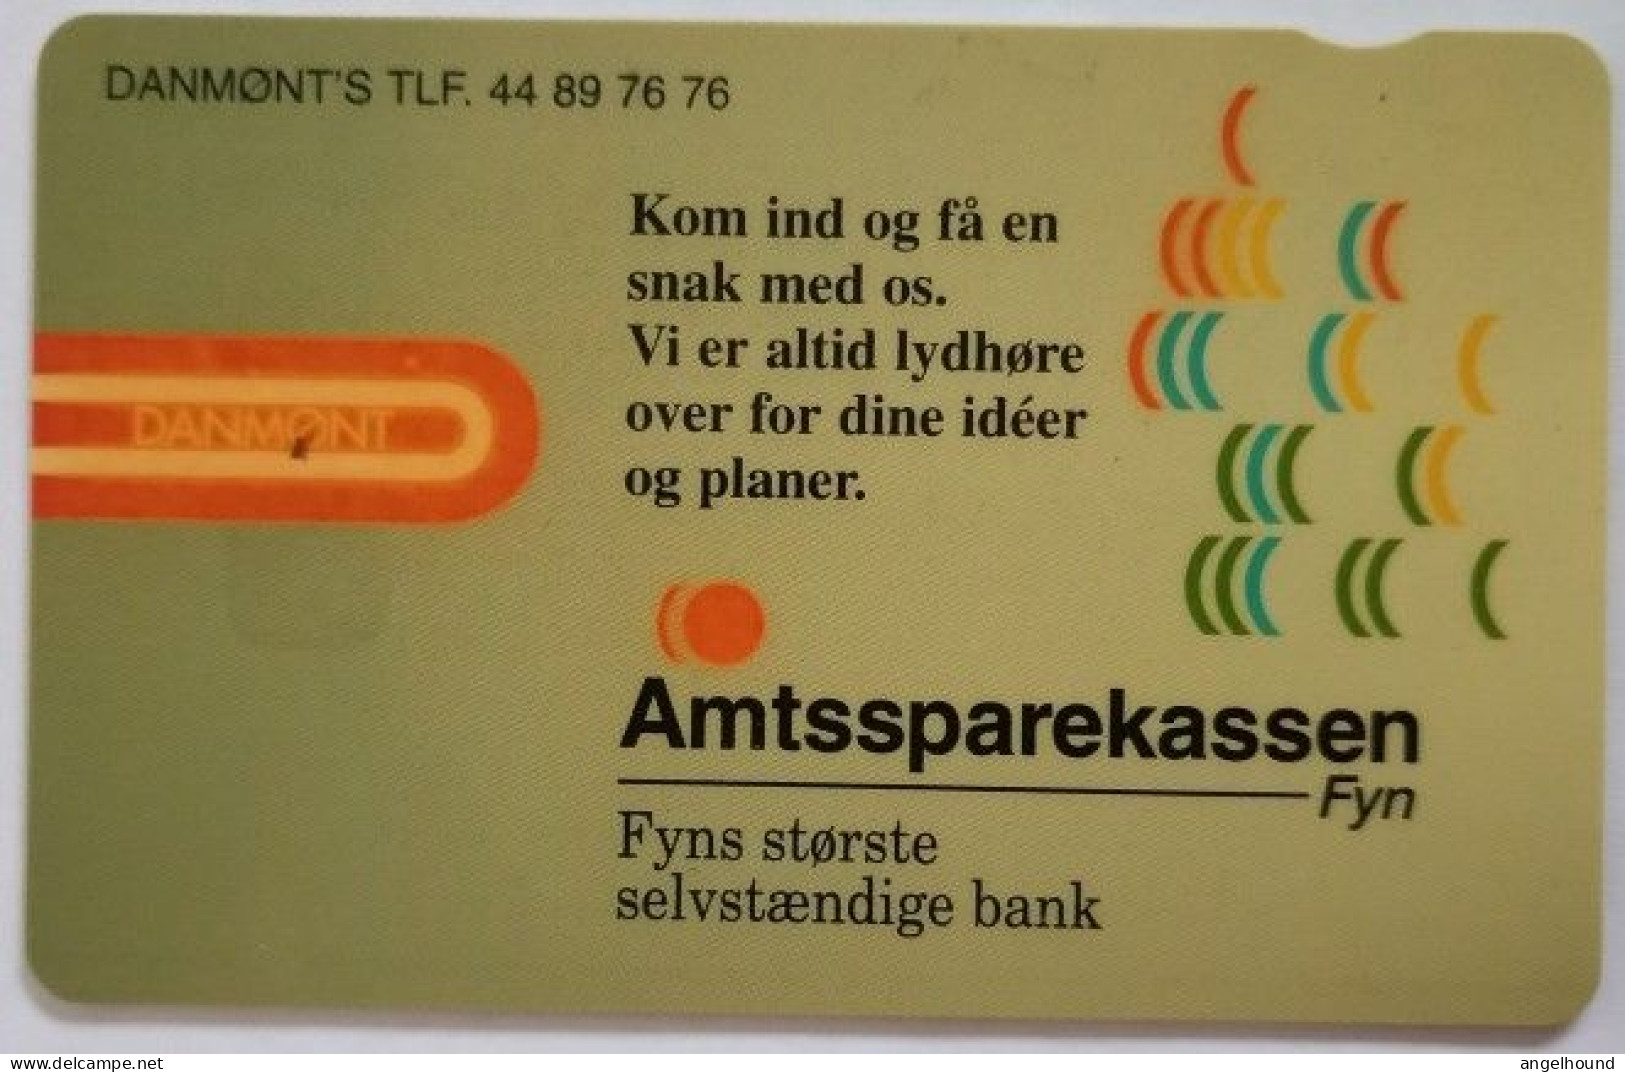 Denmark Danmont 100 Kr. - Amtssparekassen Fyn Golden Retriever - Danemark